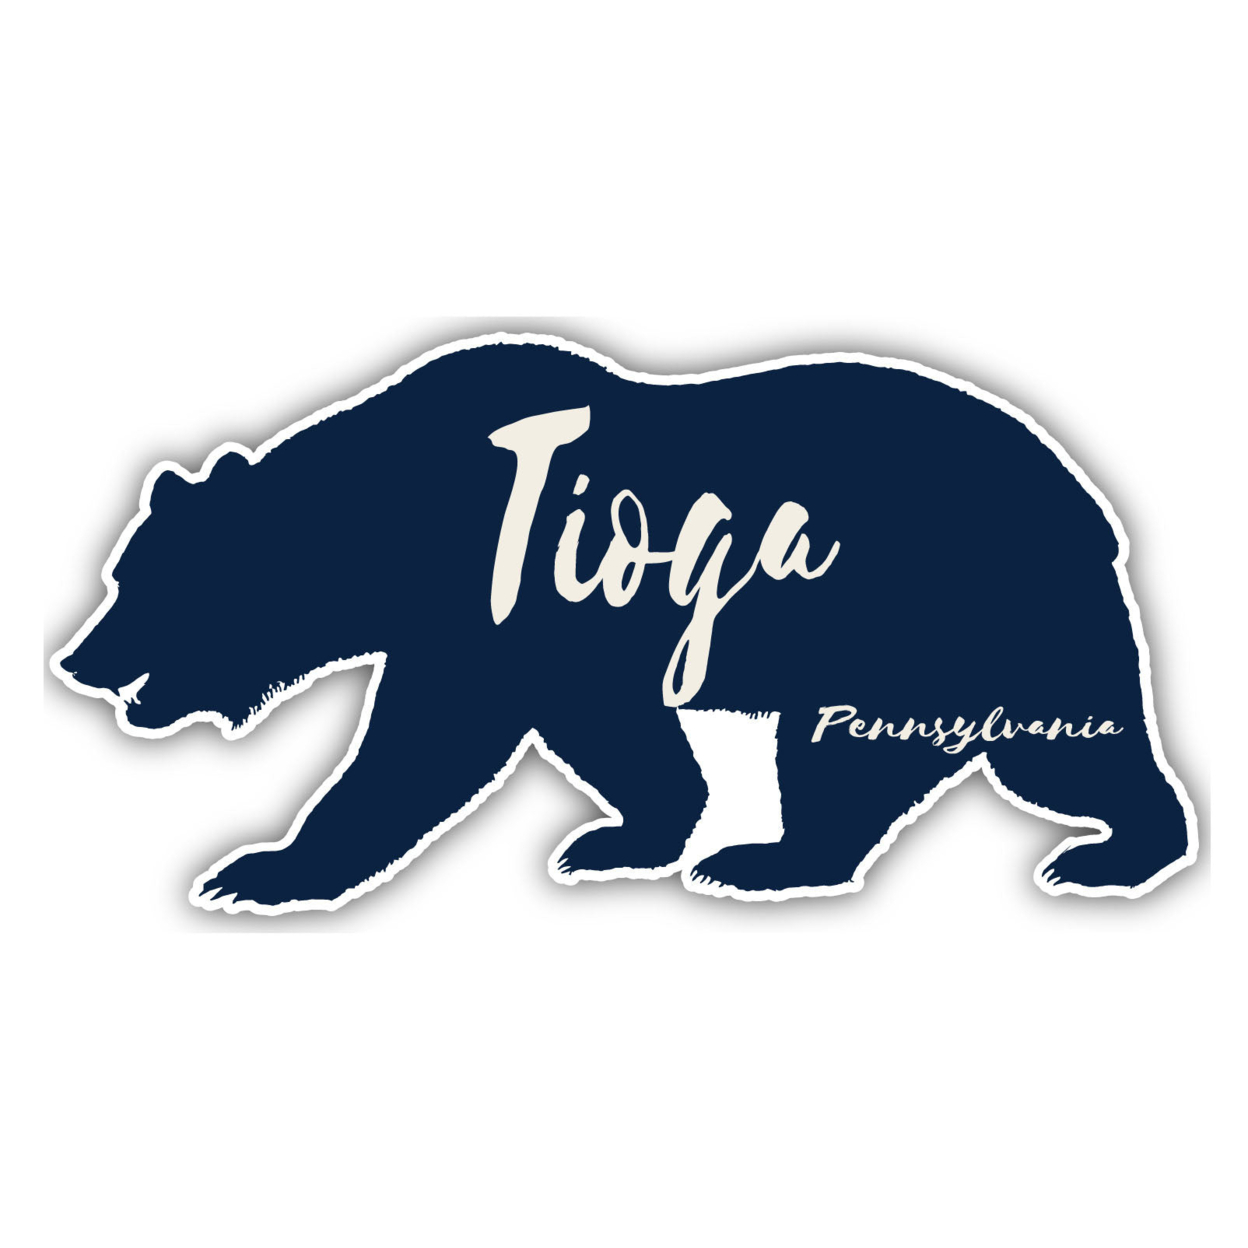 Tioga Pennsylvania Souvenir Decorative Stickers (Choose Theme And Size) - Single Unit, 2-Inch, Bear